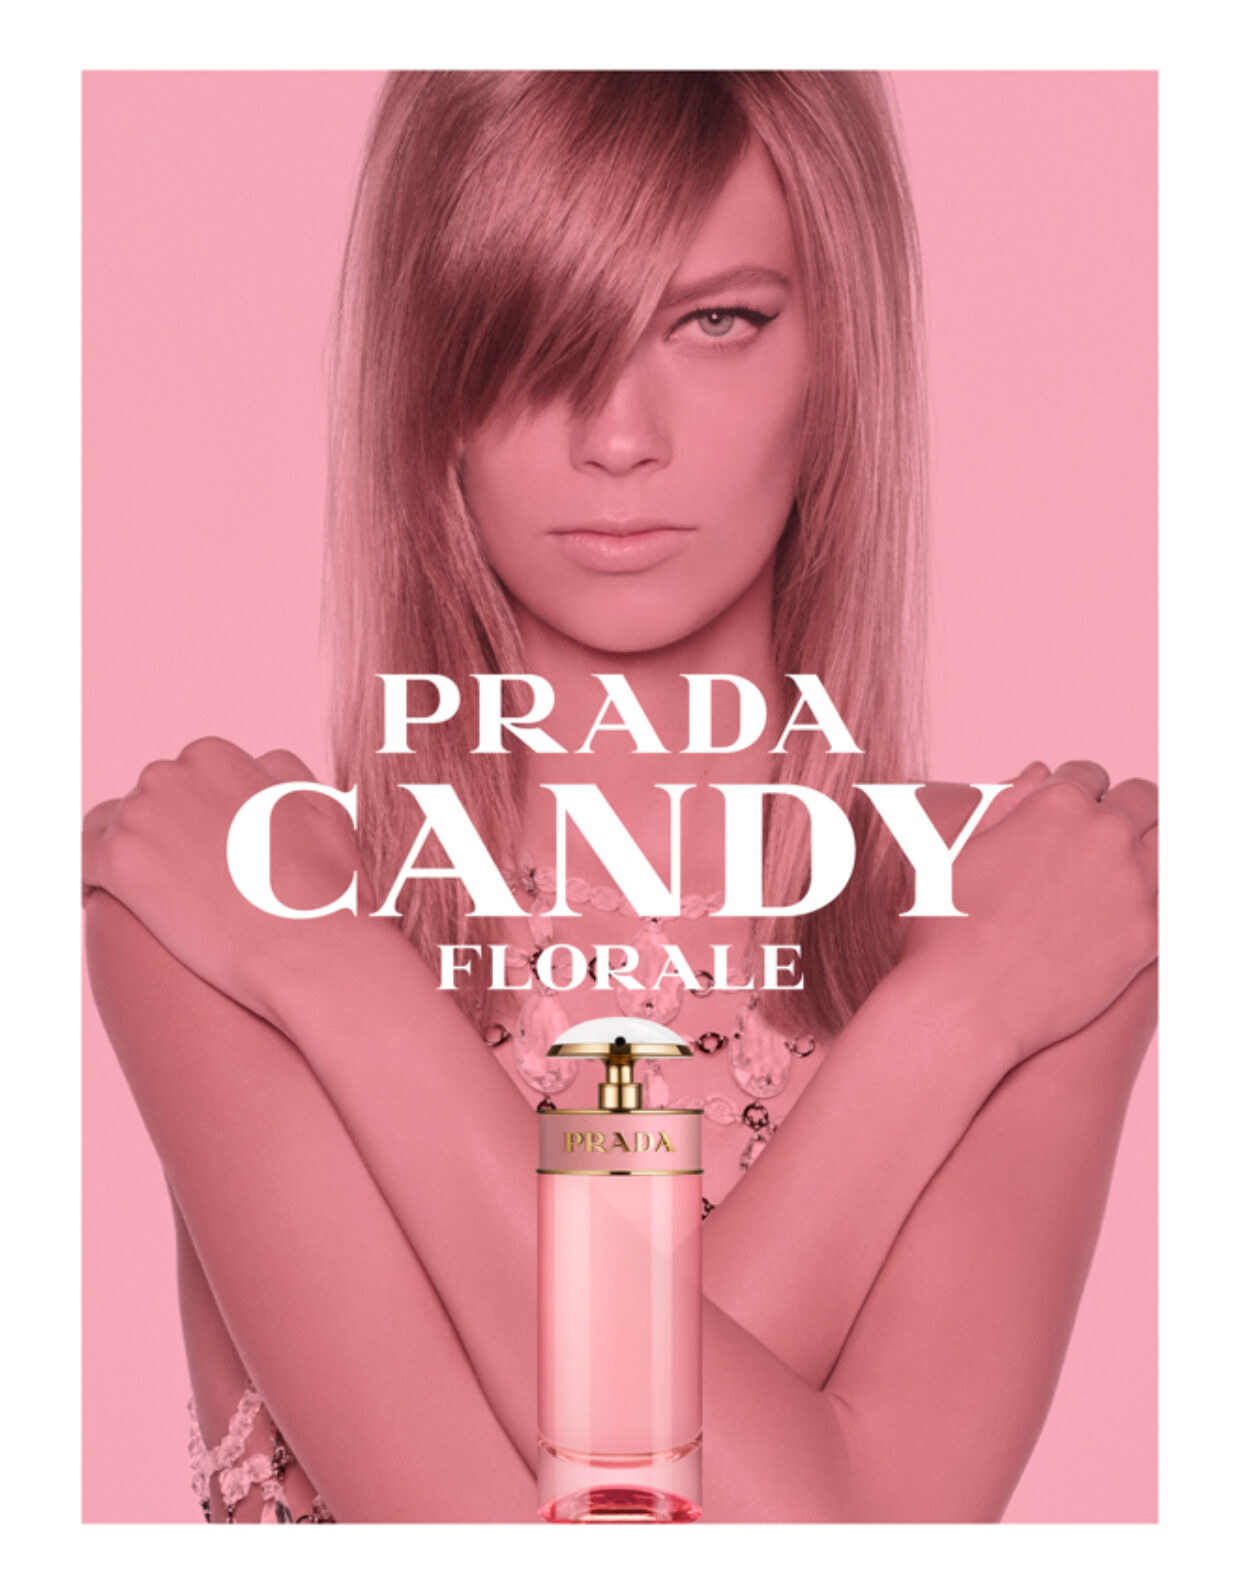 Prada Candy by Robin Broadbent | 2